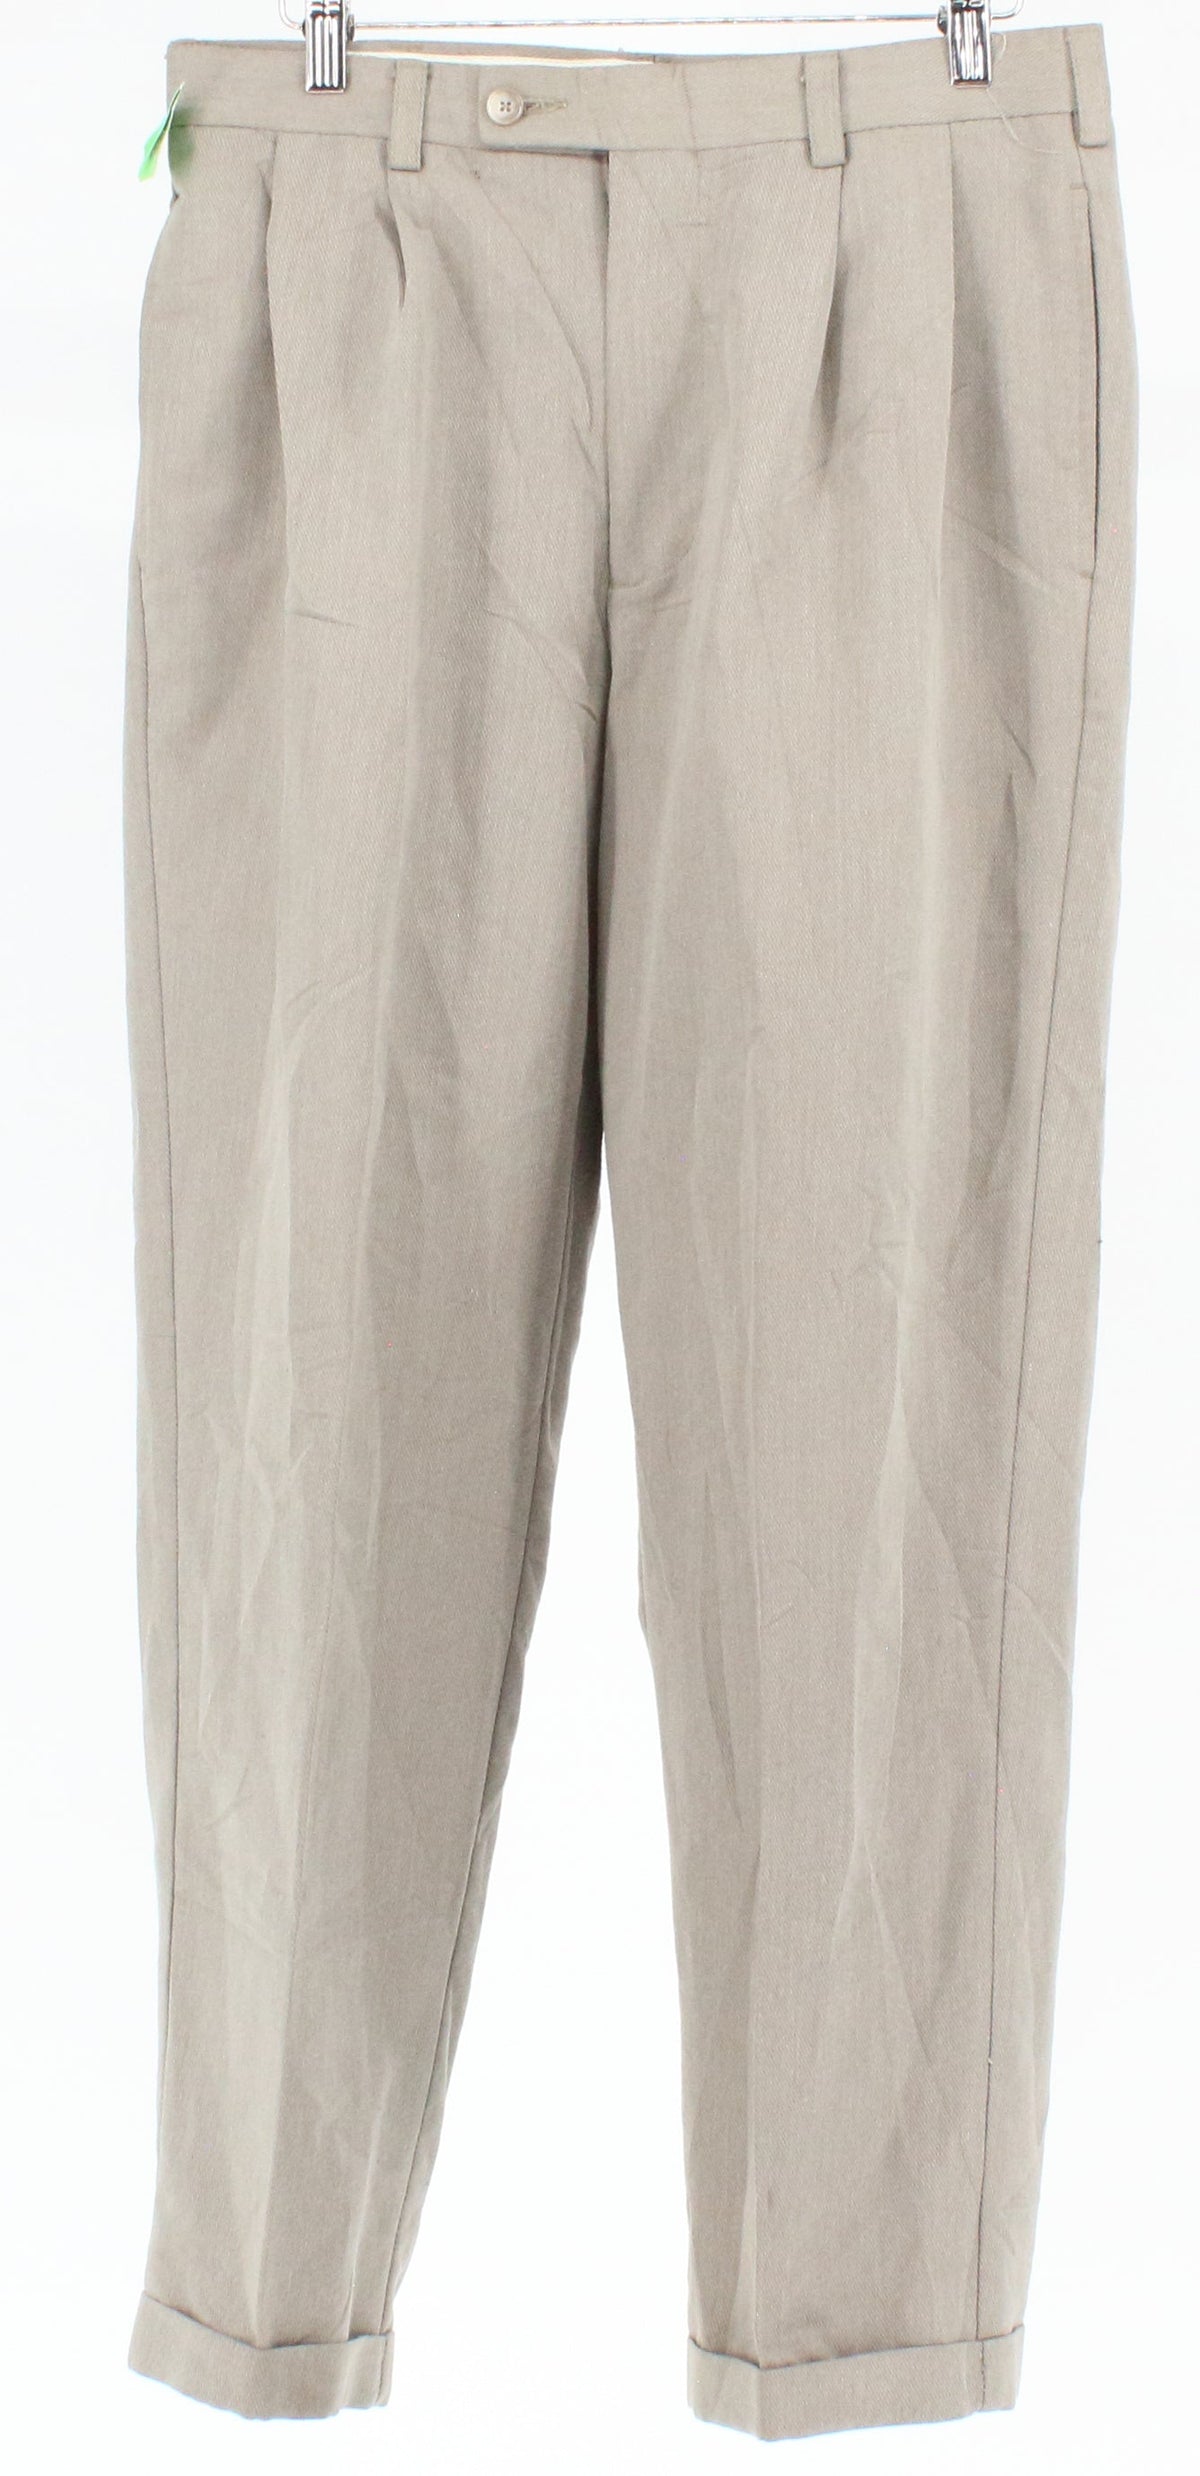 Arrow Light Beige Trouser Pants With folded Bottom Hem